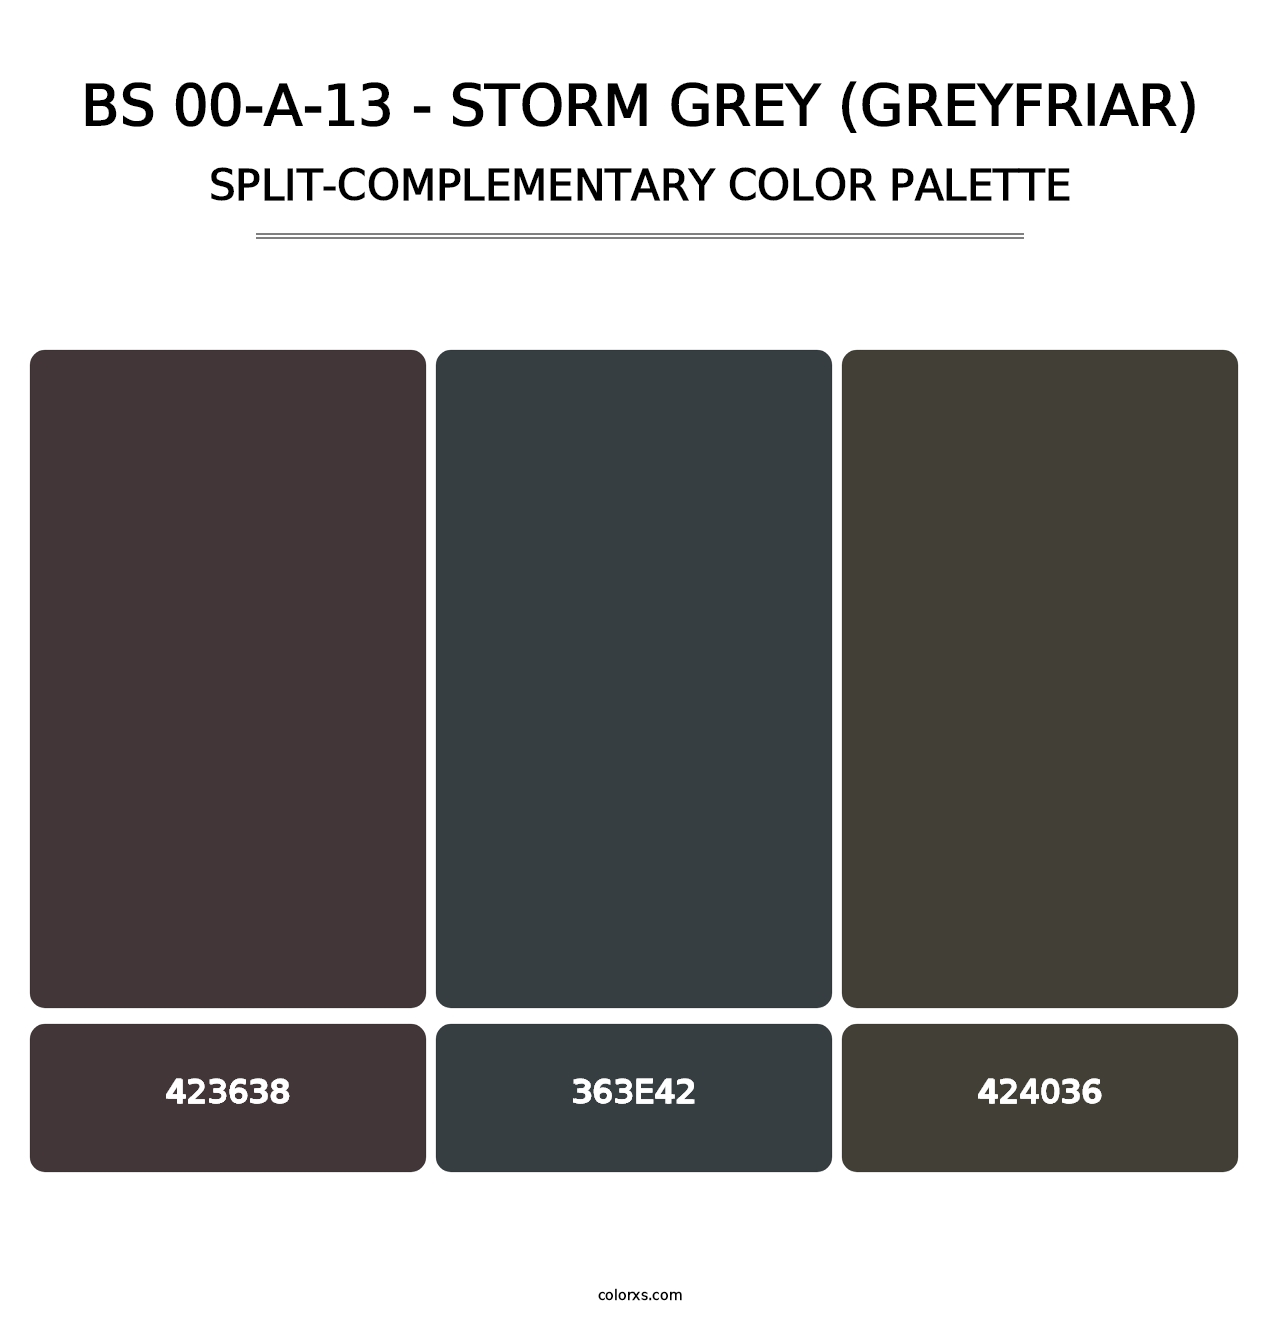 BS 00-A-13 - Storm Grey (Greyfriar) - Split-Complementary Color Palette